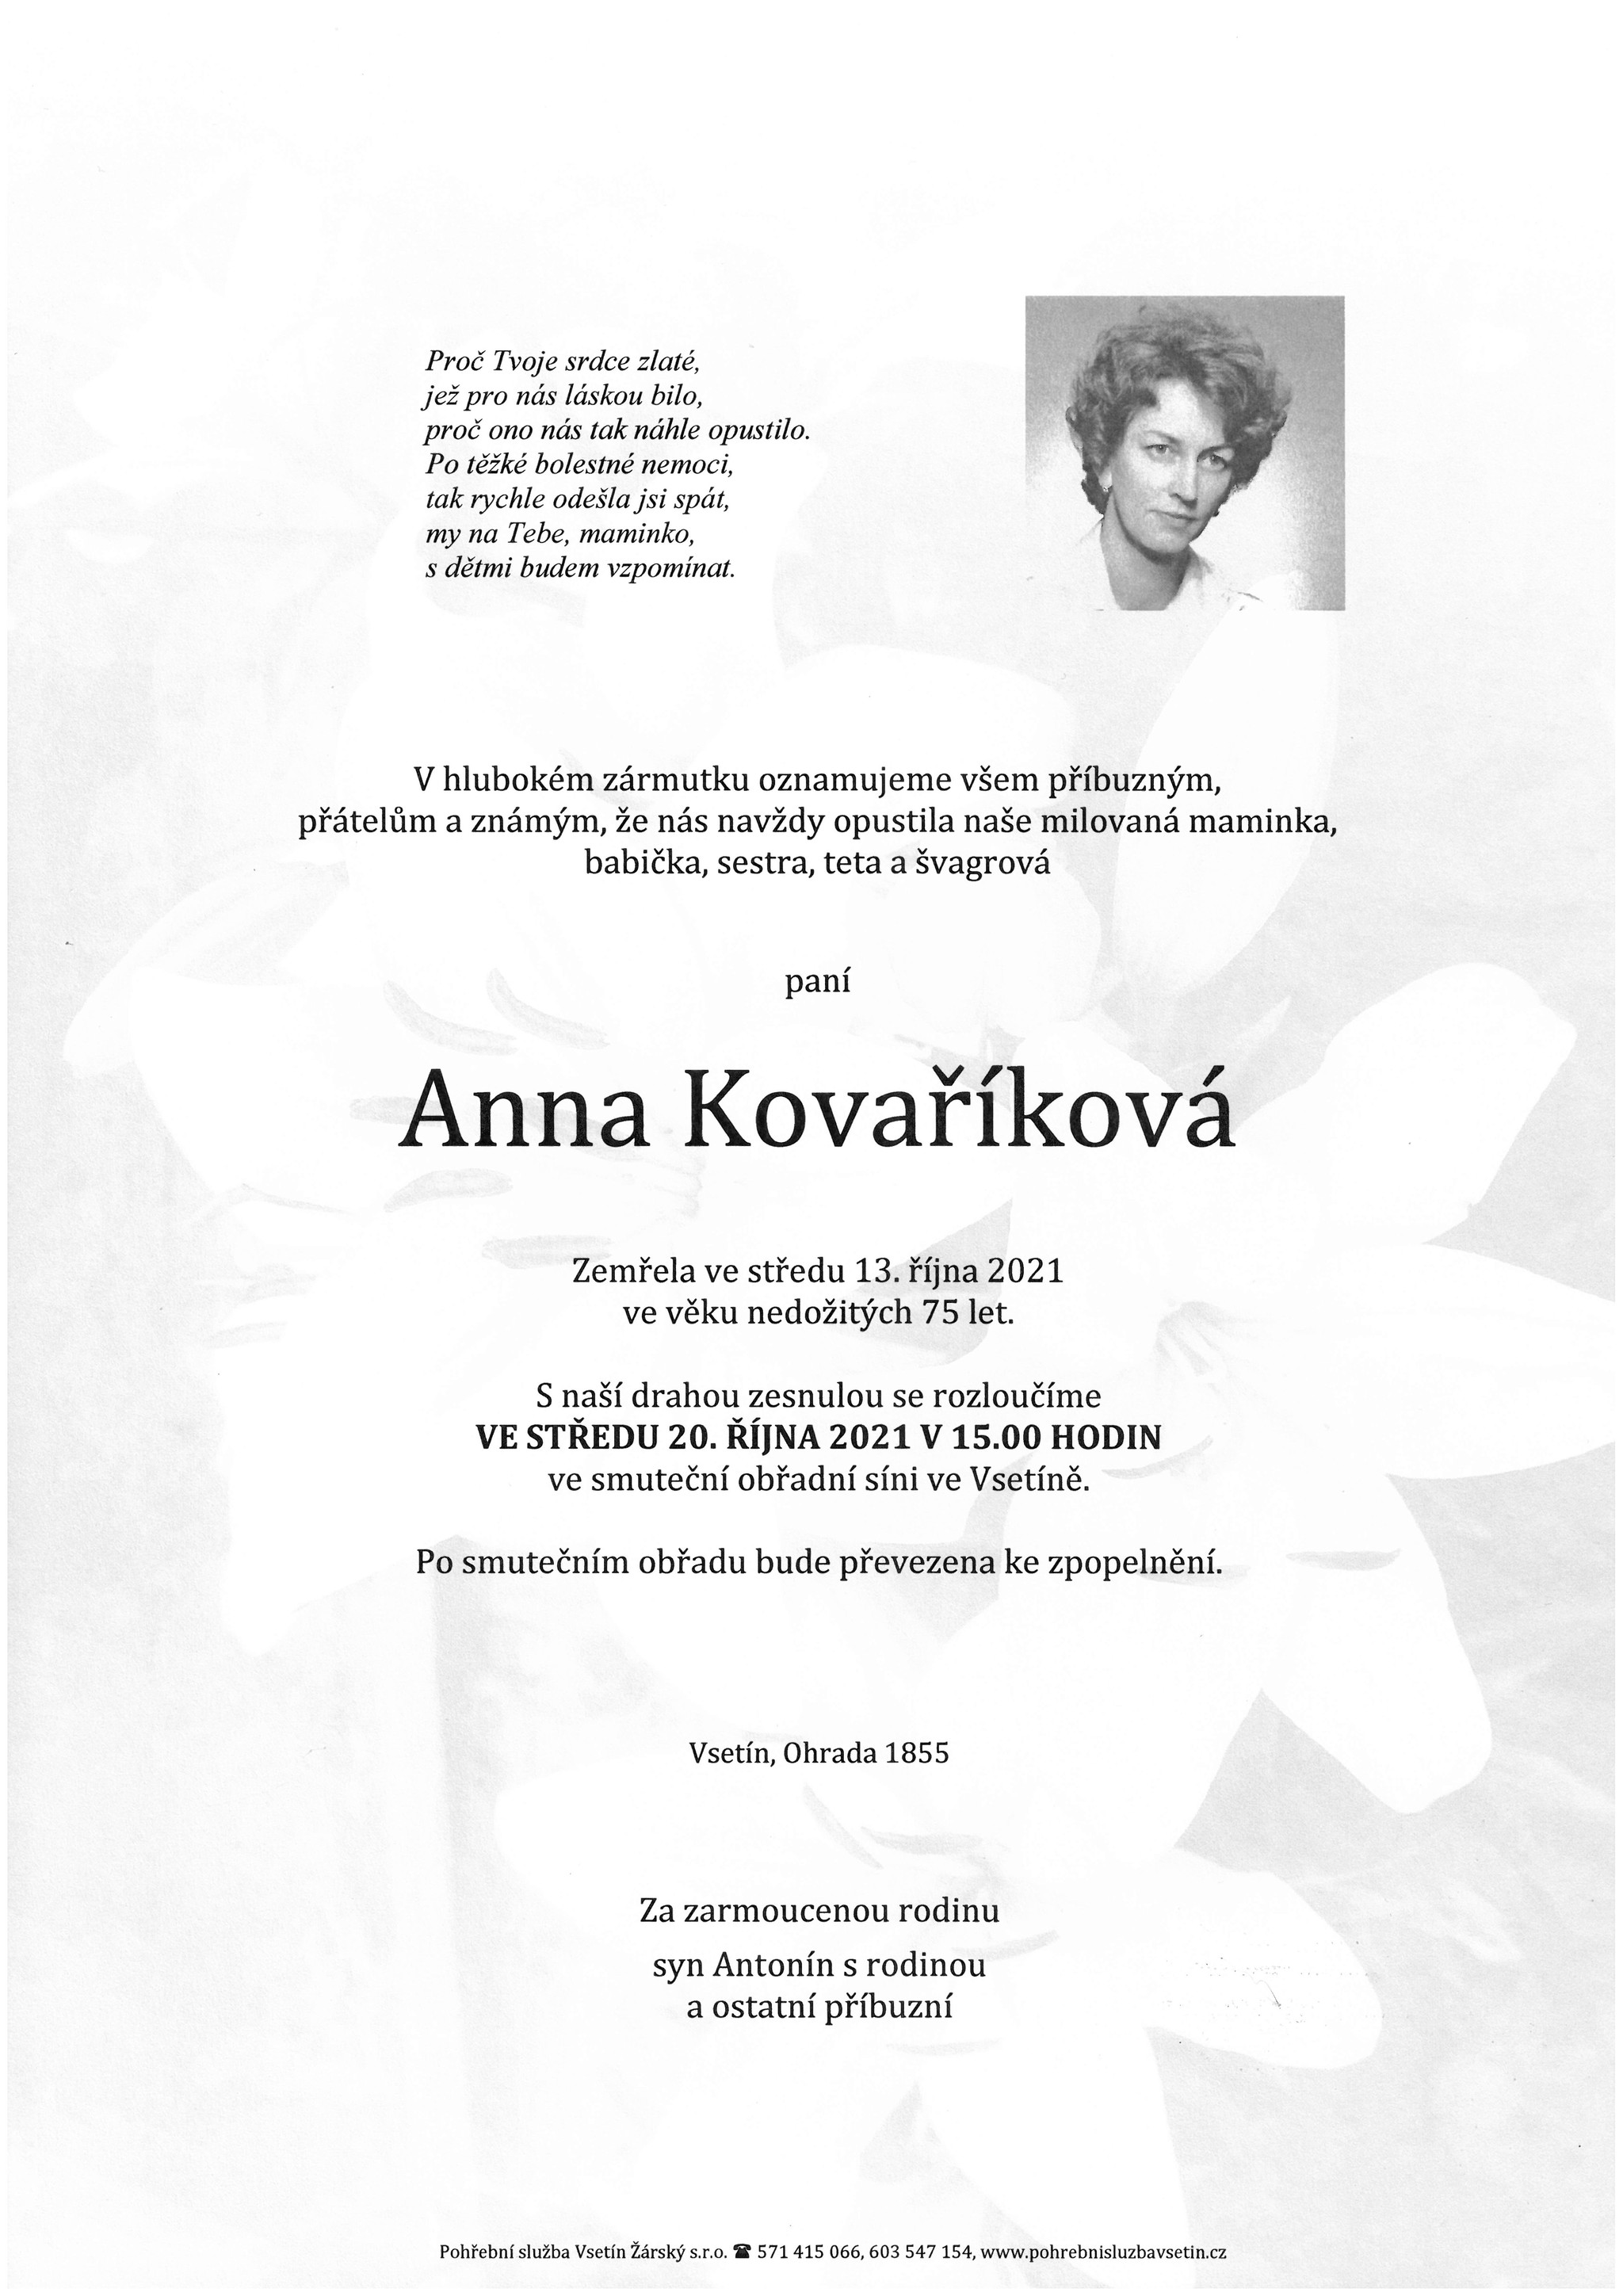 Anna Kovaříková